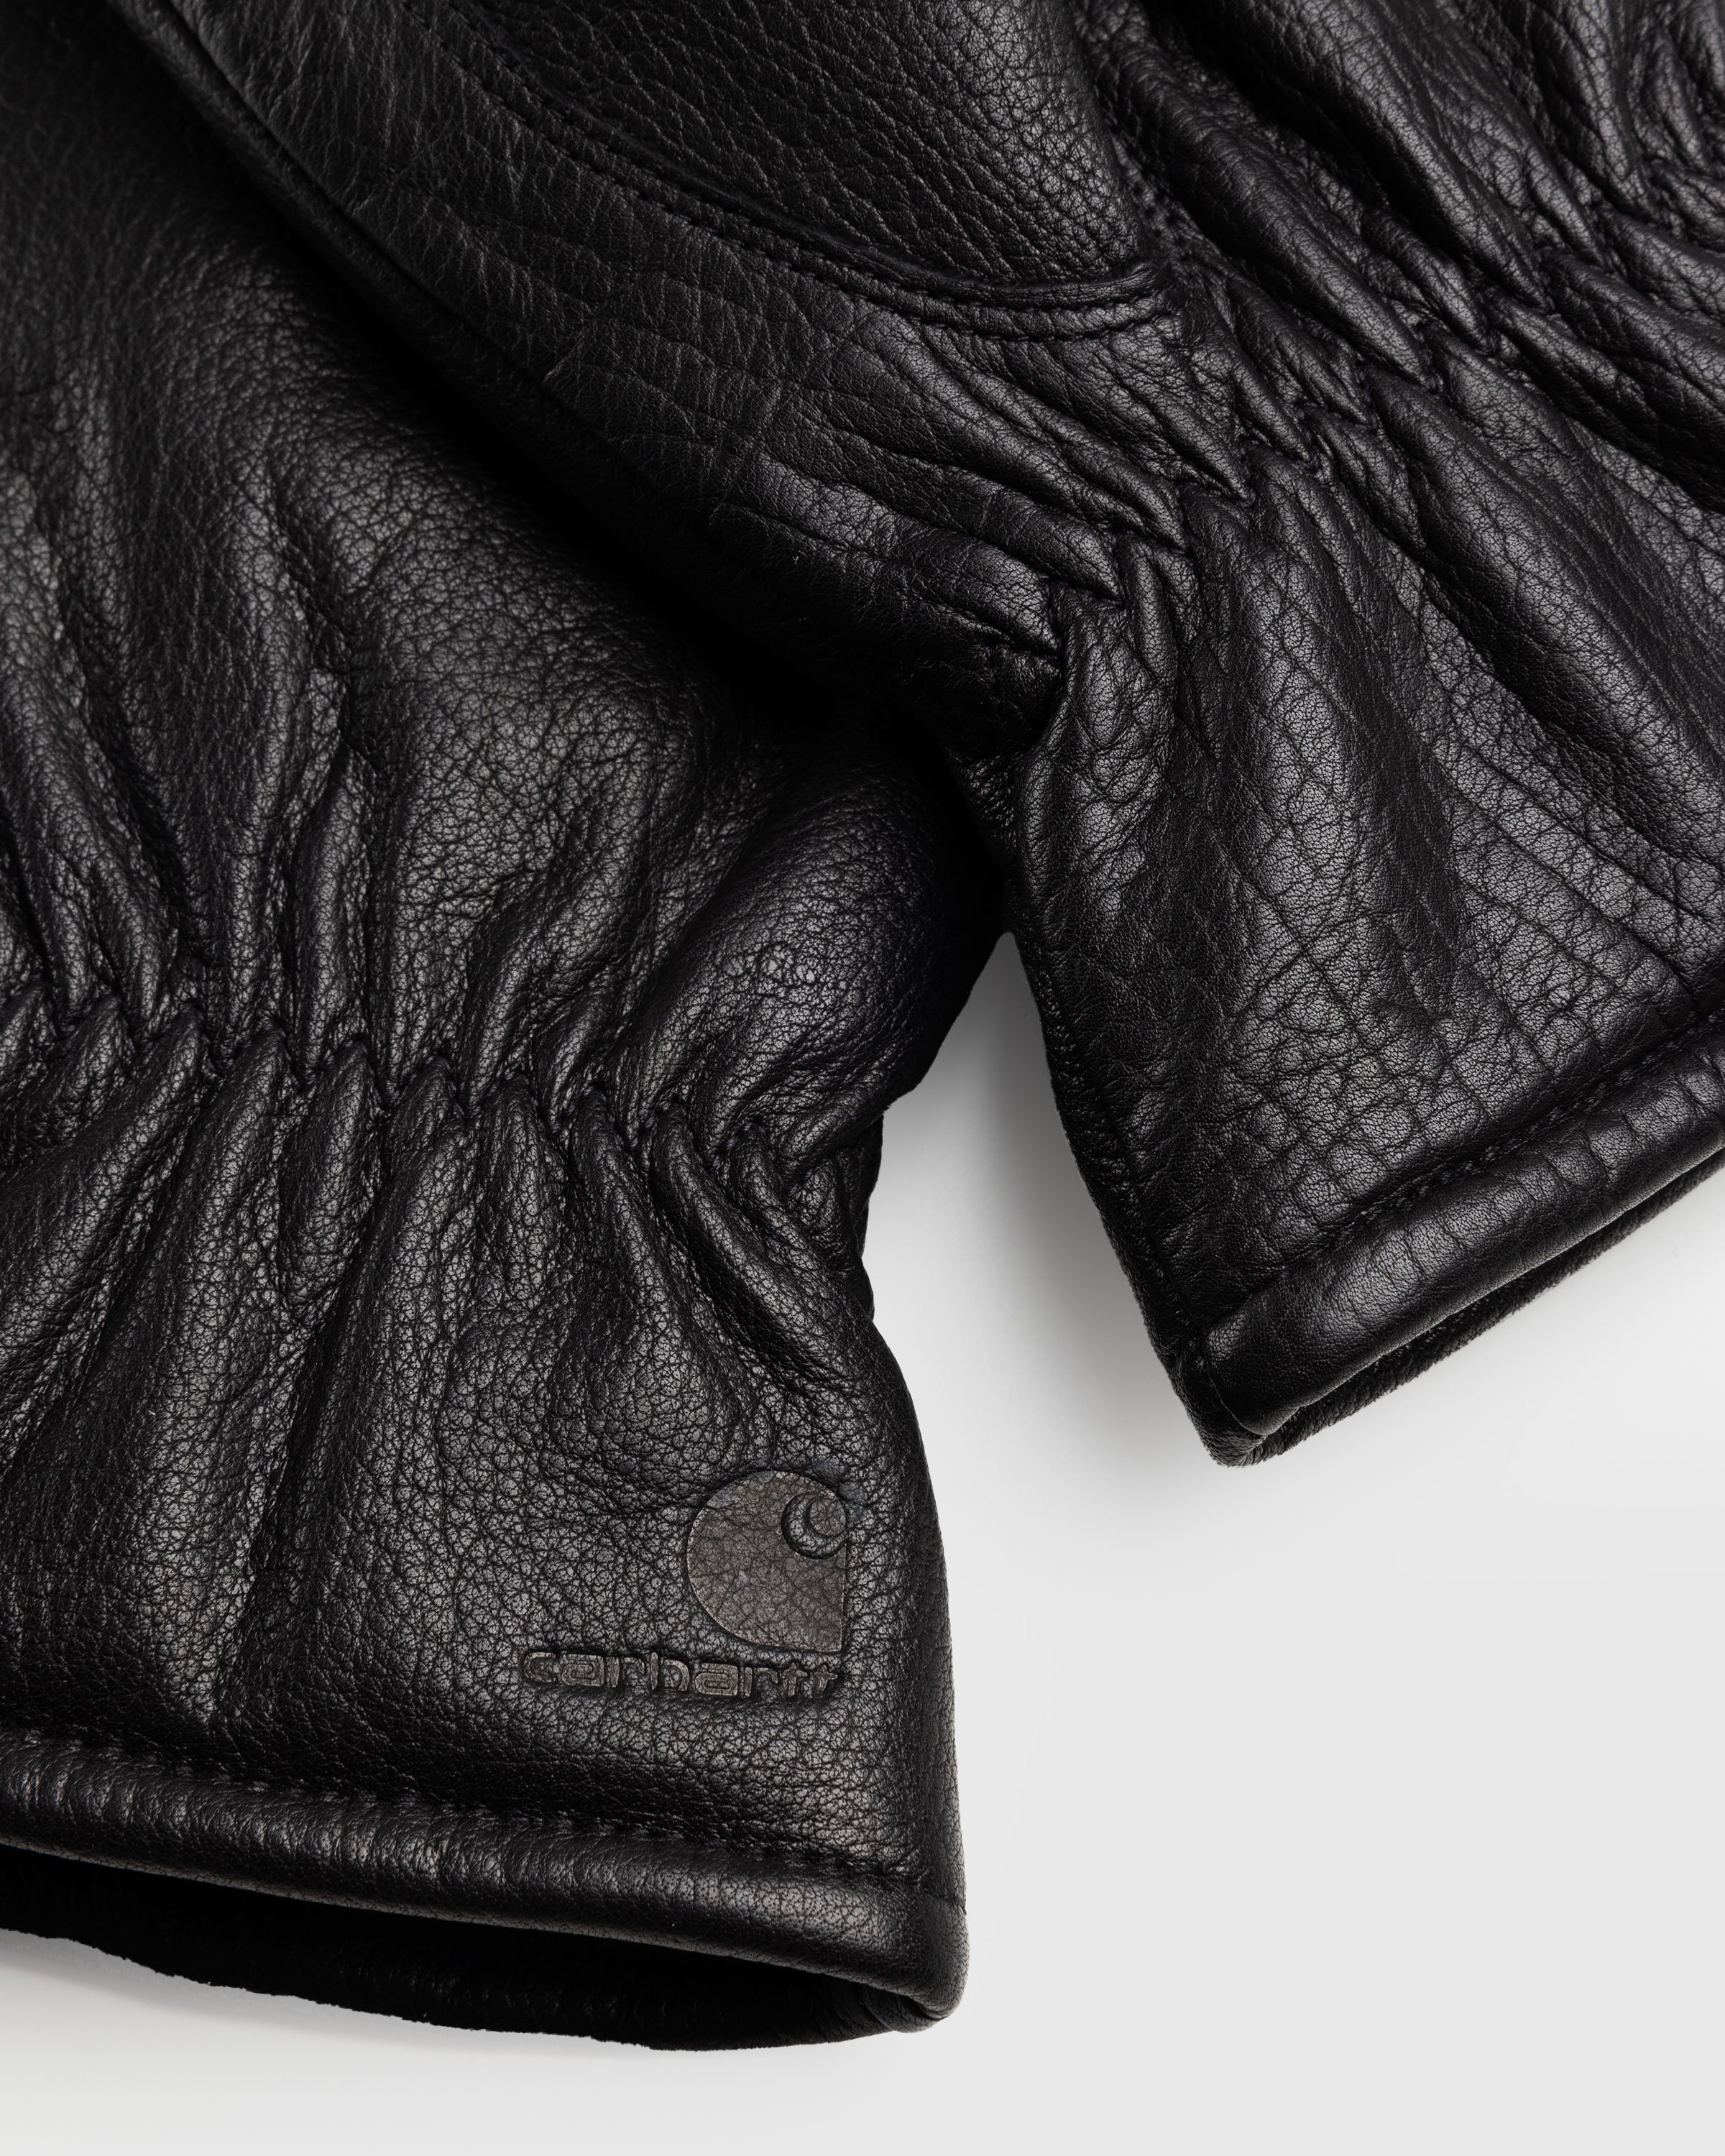 Carhartt WIP - Fonda Gloves Black - Accessories - Black - Image 3